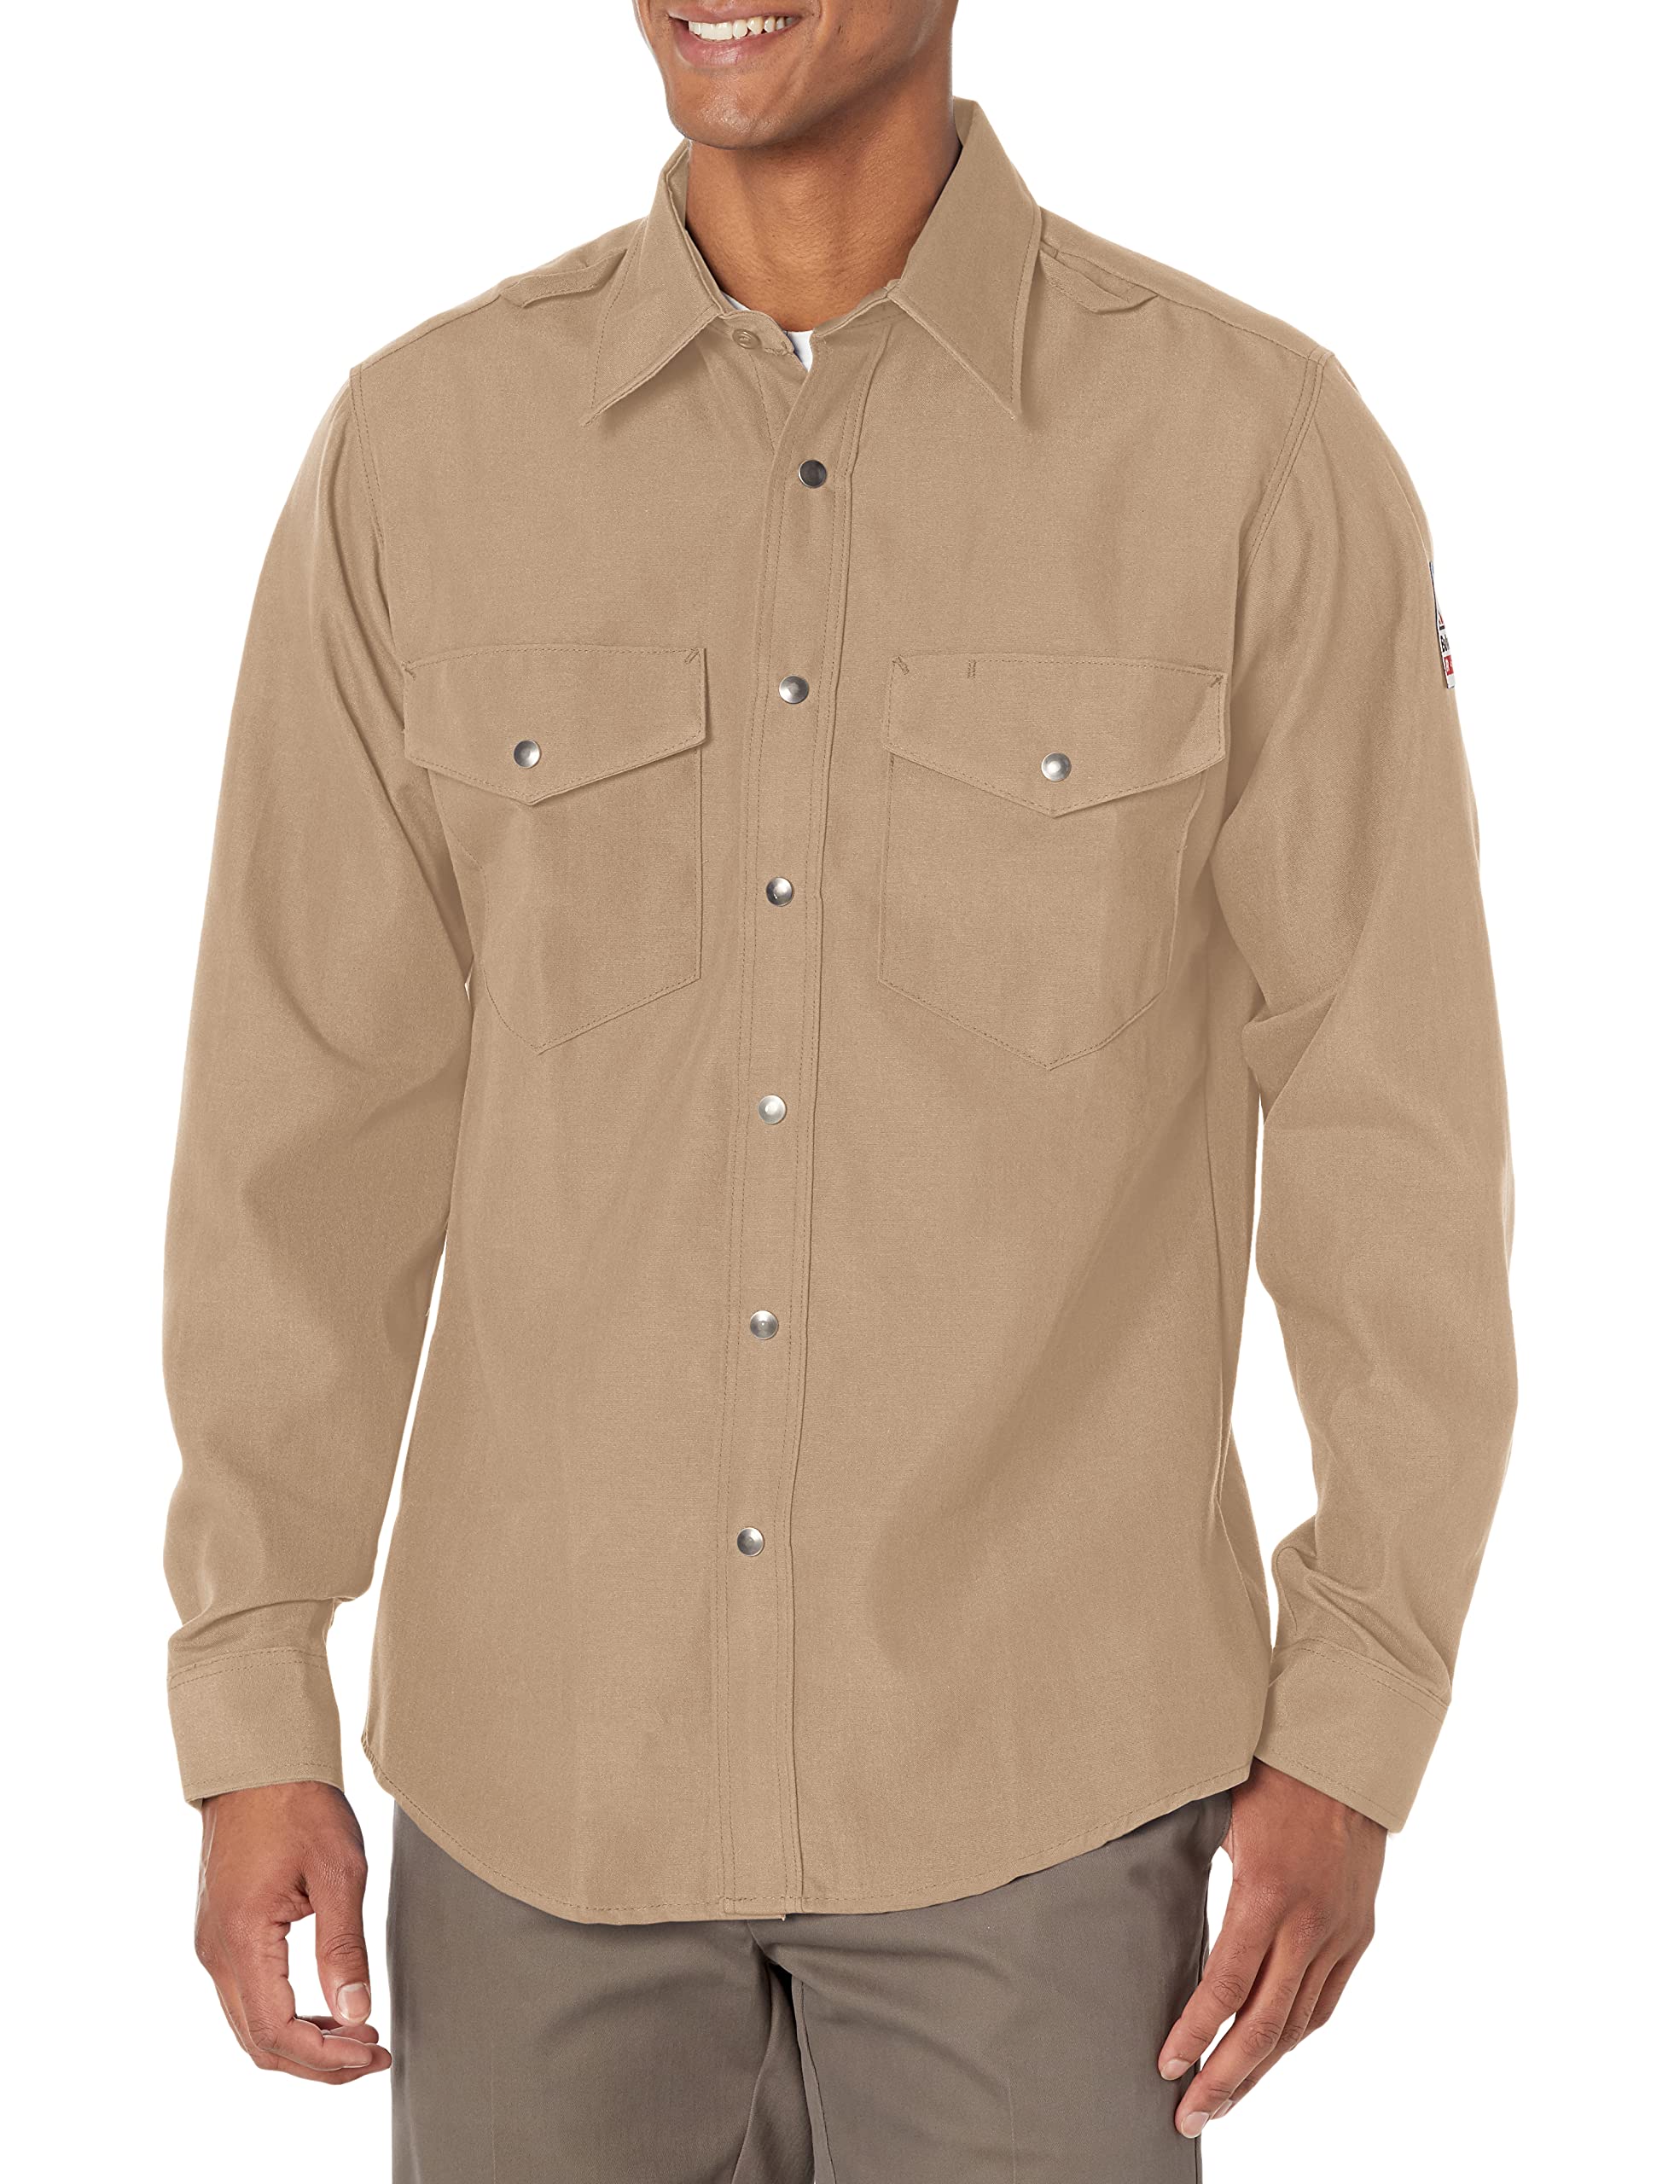 Bulwark Flame Resistant 4.5 oz Nomex IIIA Snap-Front Uniform Shirt